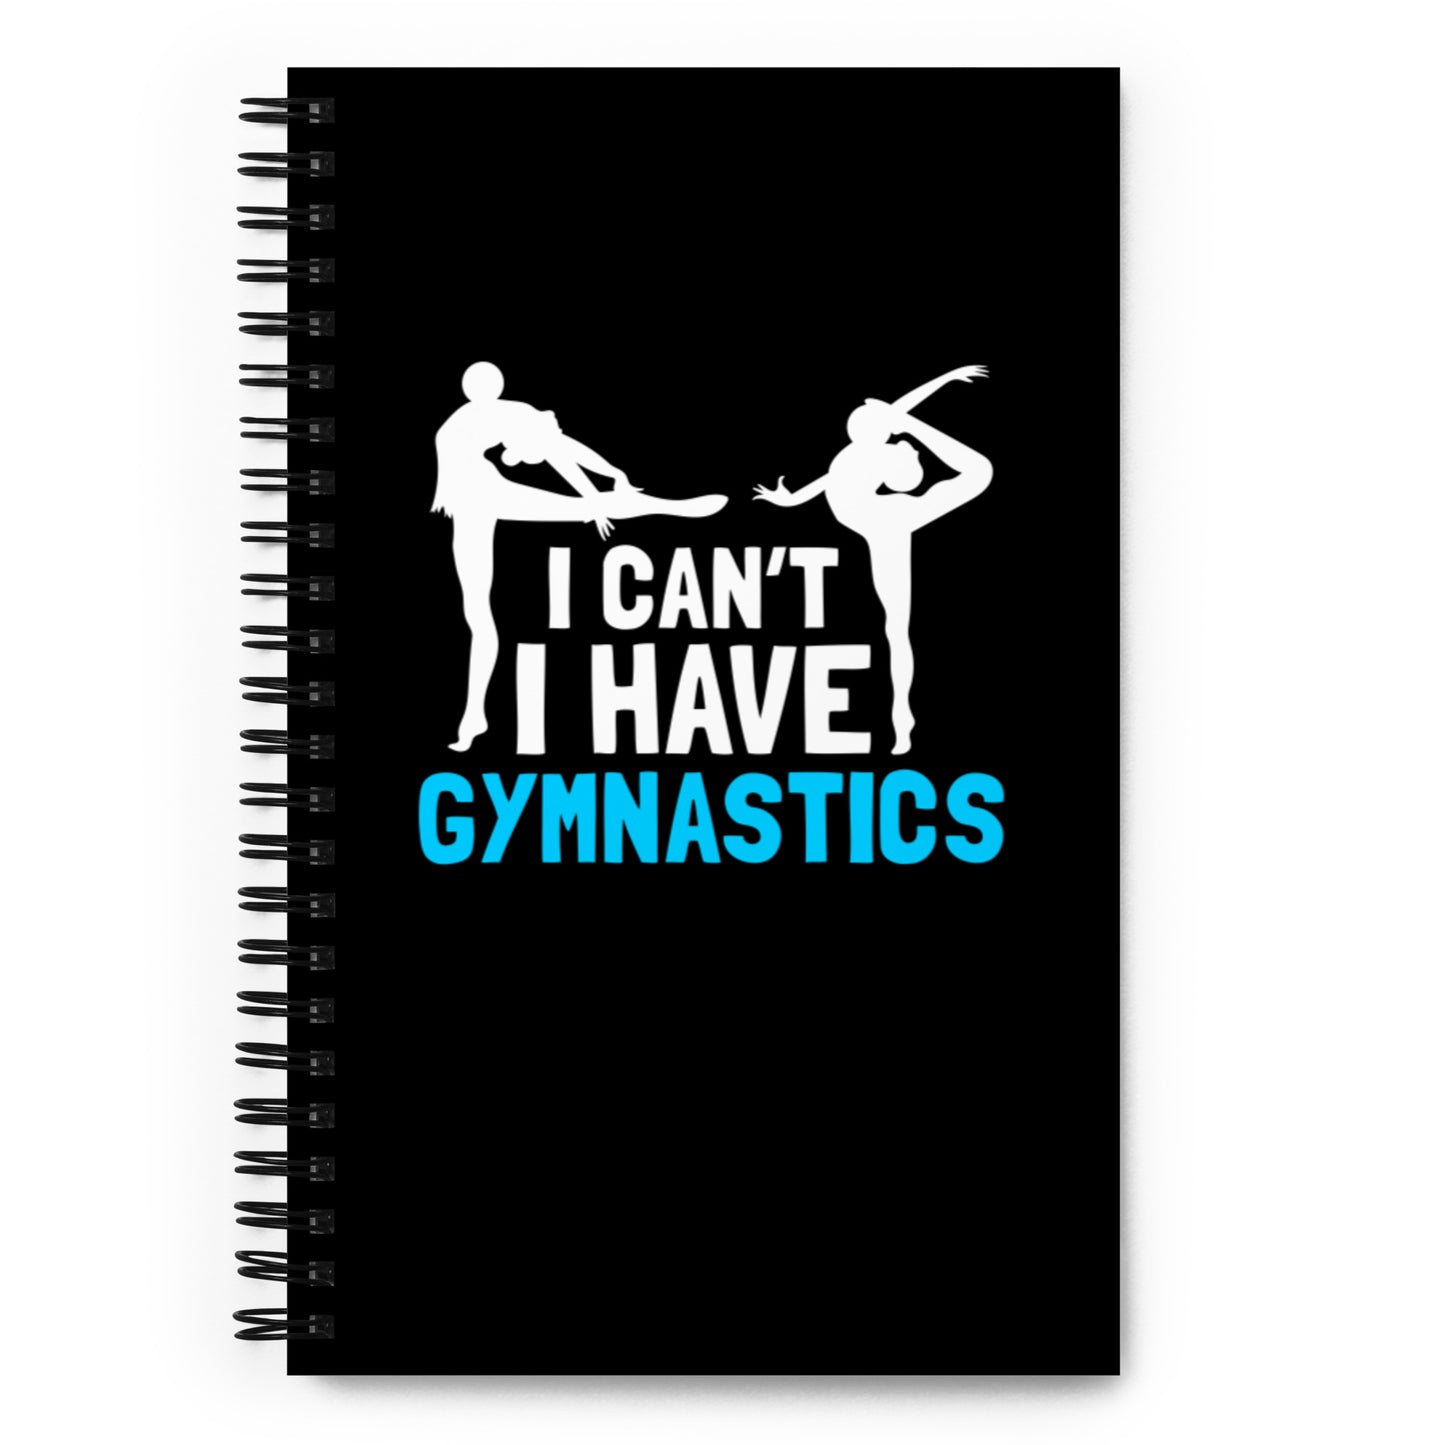 I Can't I Have Gymnastics Spiral notebook